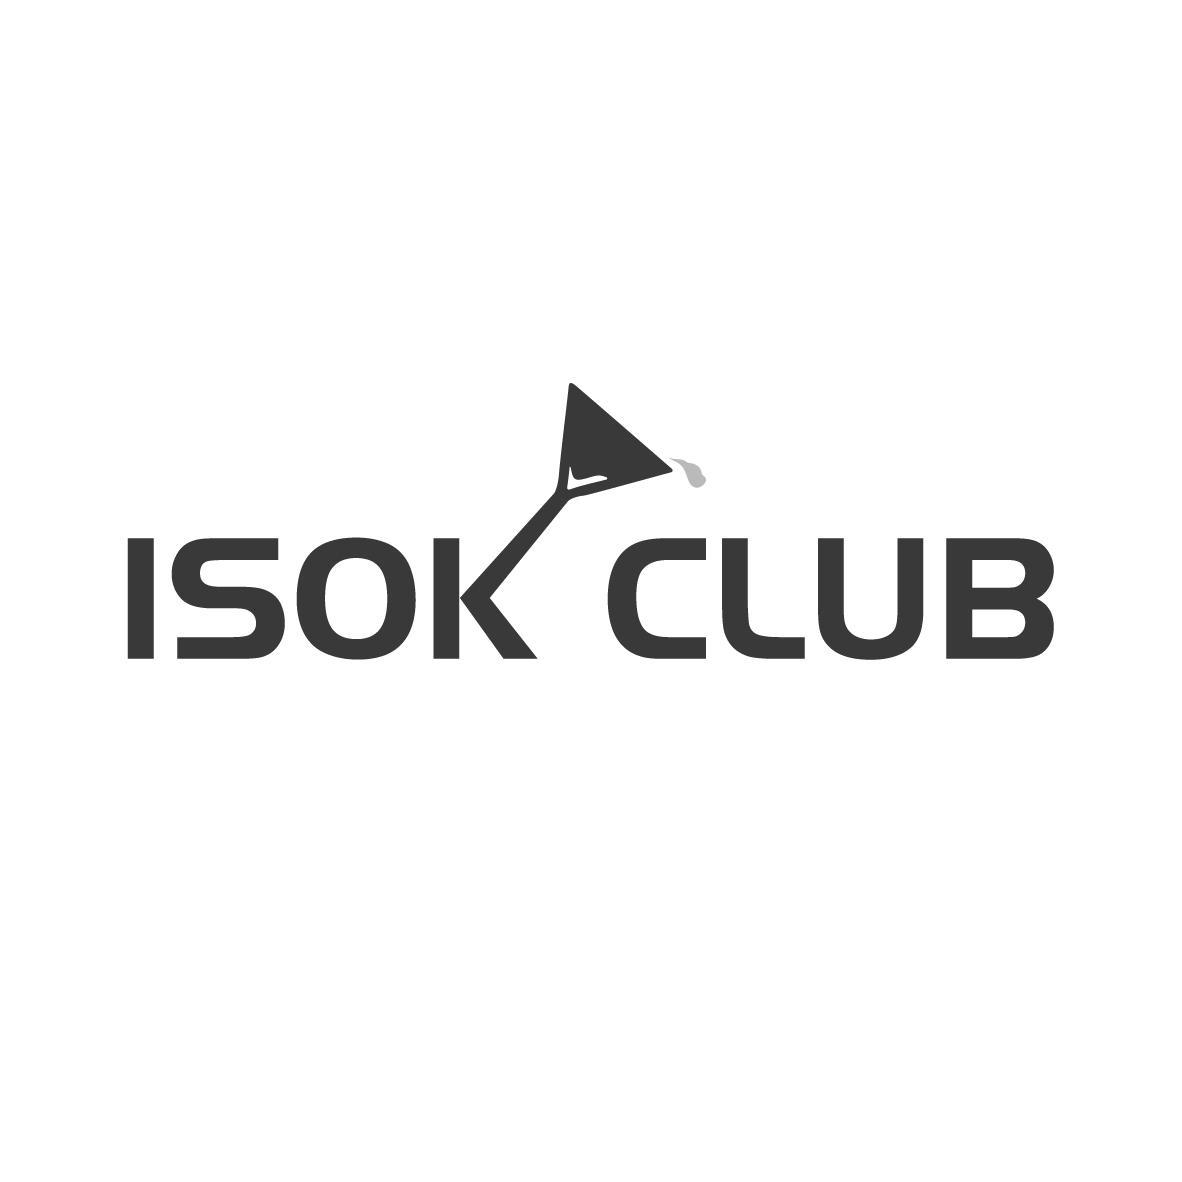 ISOK CLUB商标转让